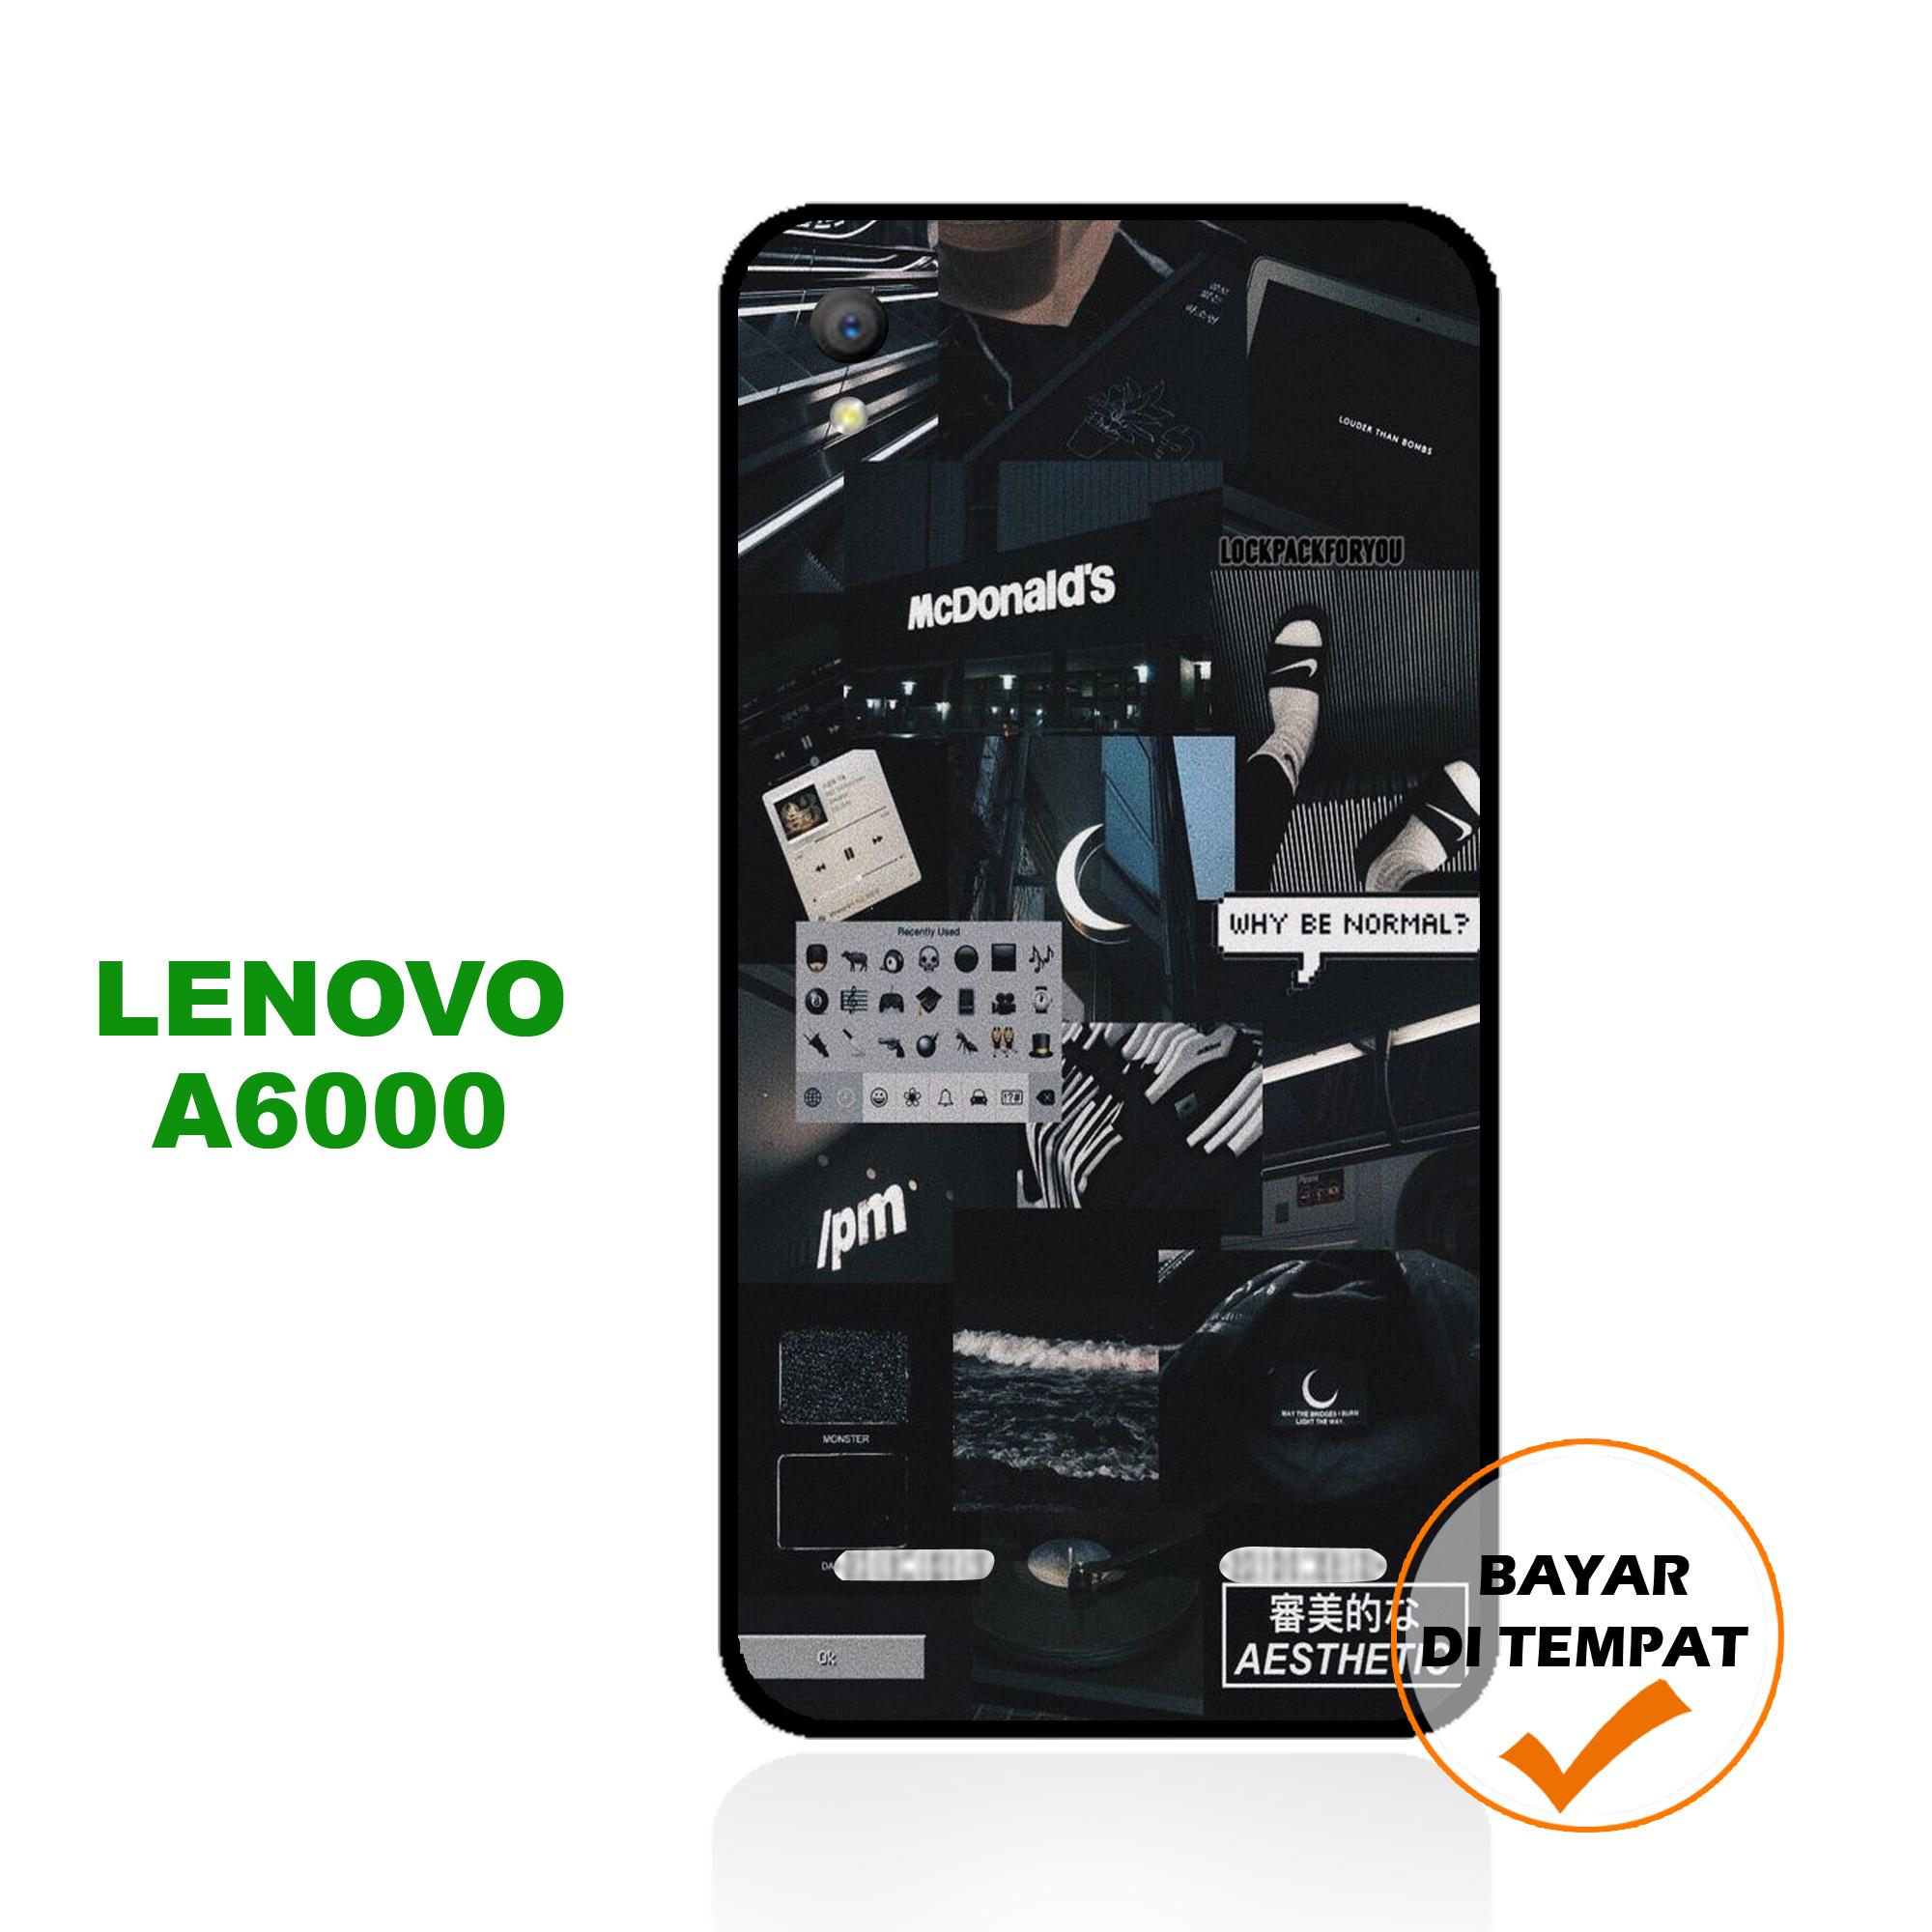 Case Lenovo A6000 02 74 Lazada Indonesia